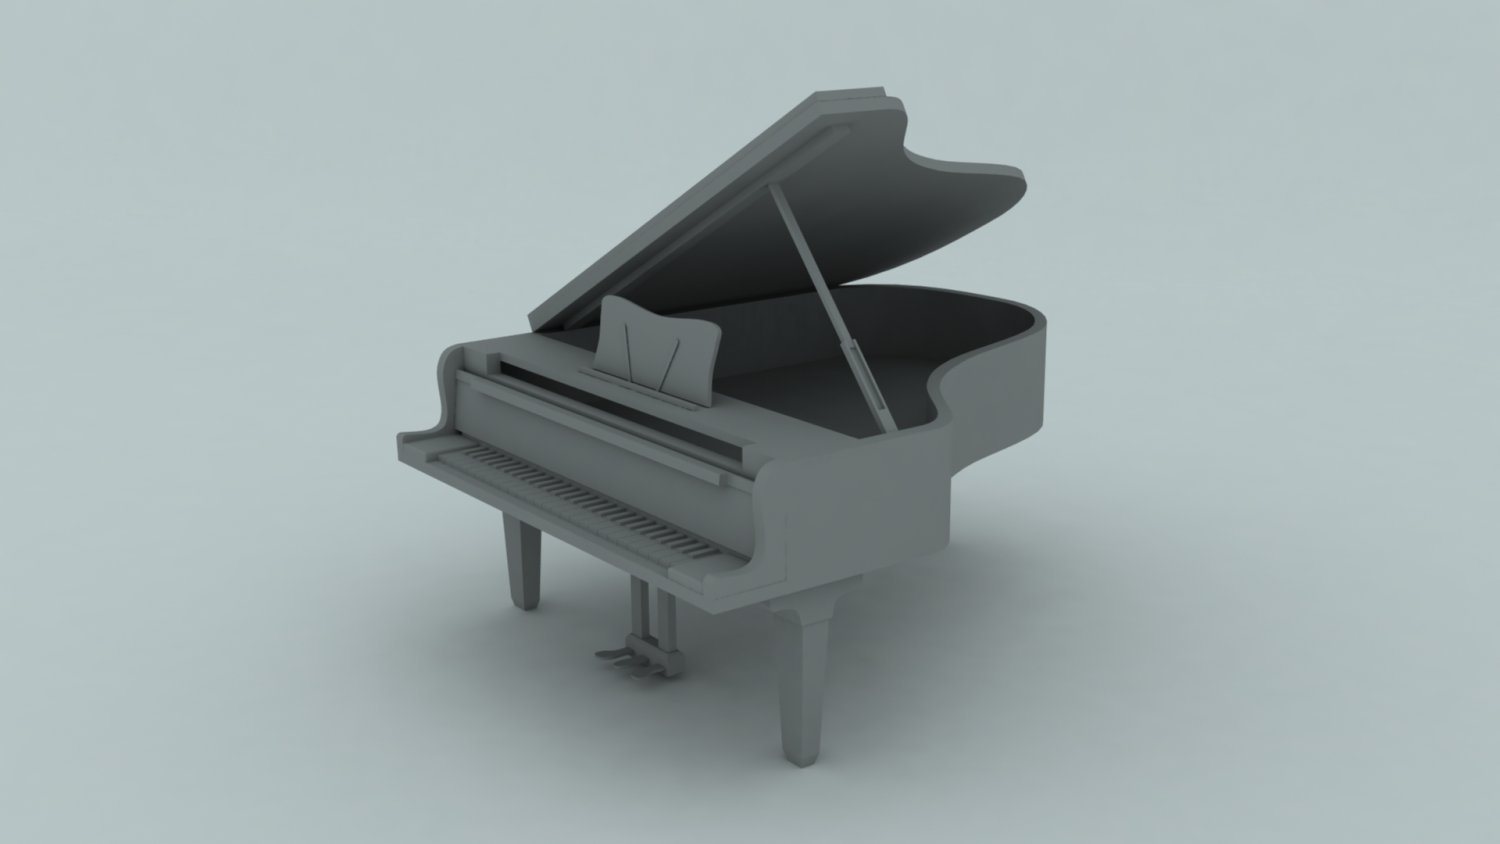 grand piano Free 3D Model in Piano 3DExport